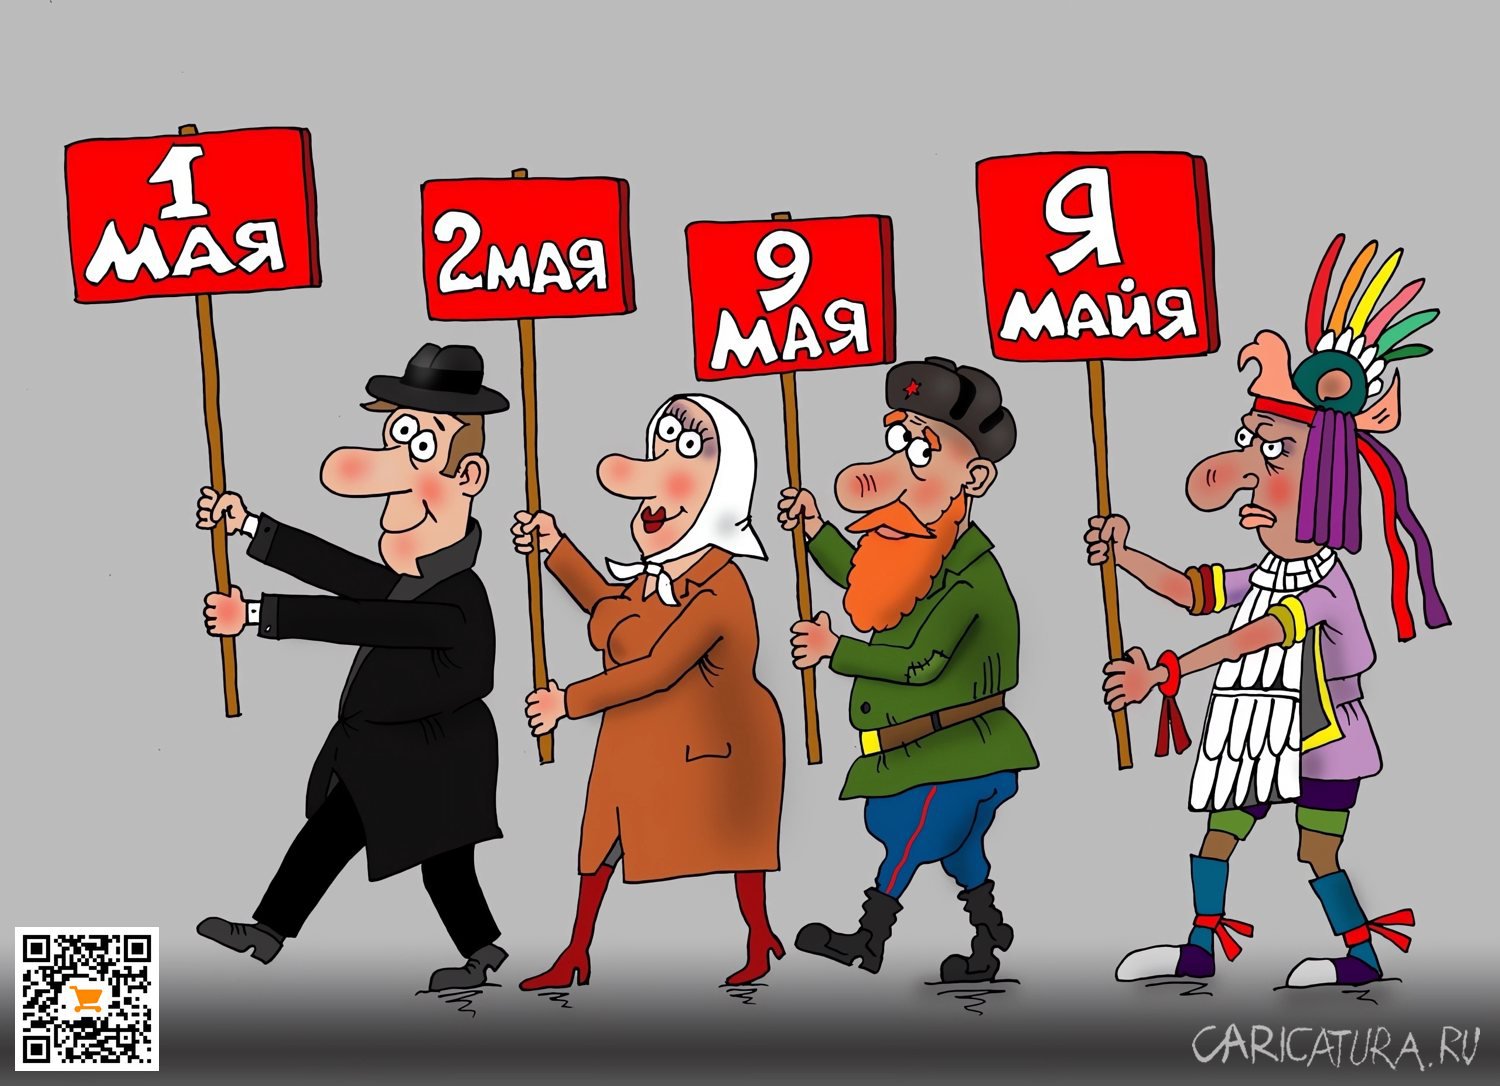 Карикатура "Демонстрация", Валерий Тарасенко